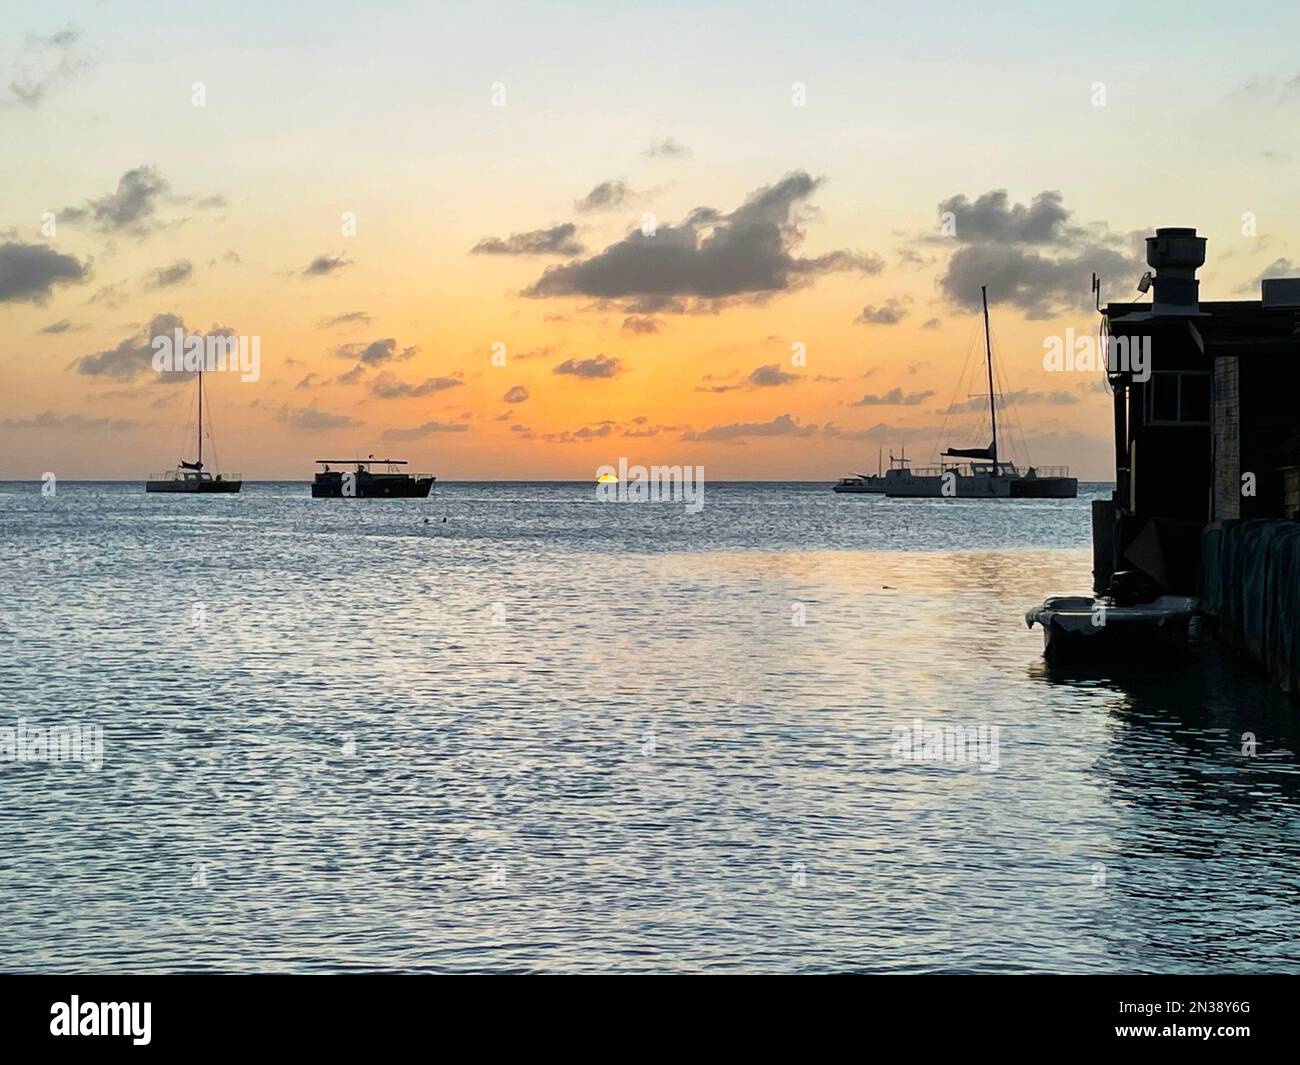 Sailboats on the horizon at sunset, on the Caribbean sea, off the coast of Aruba Stock Photo